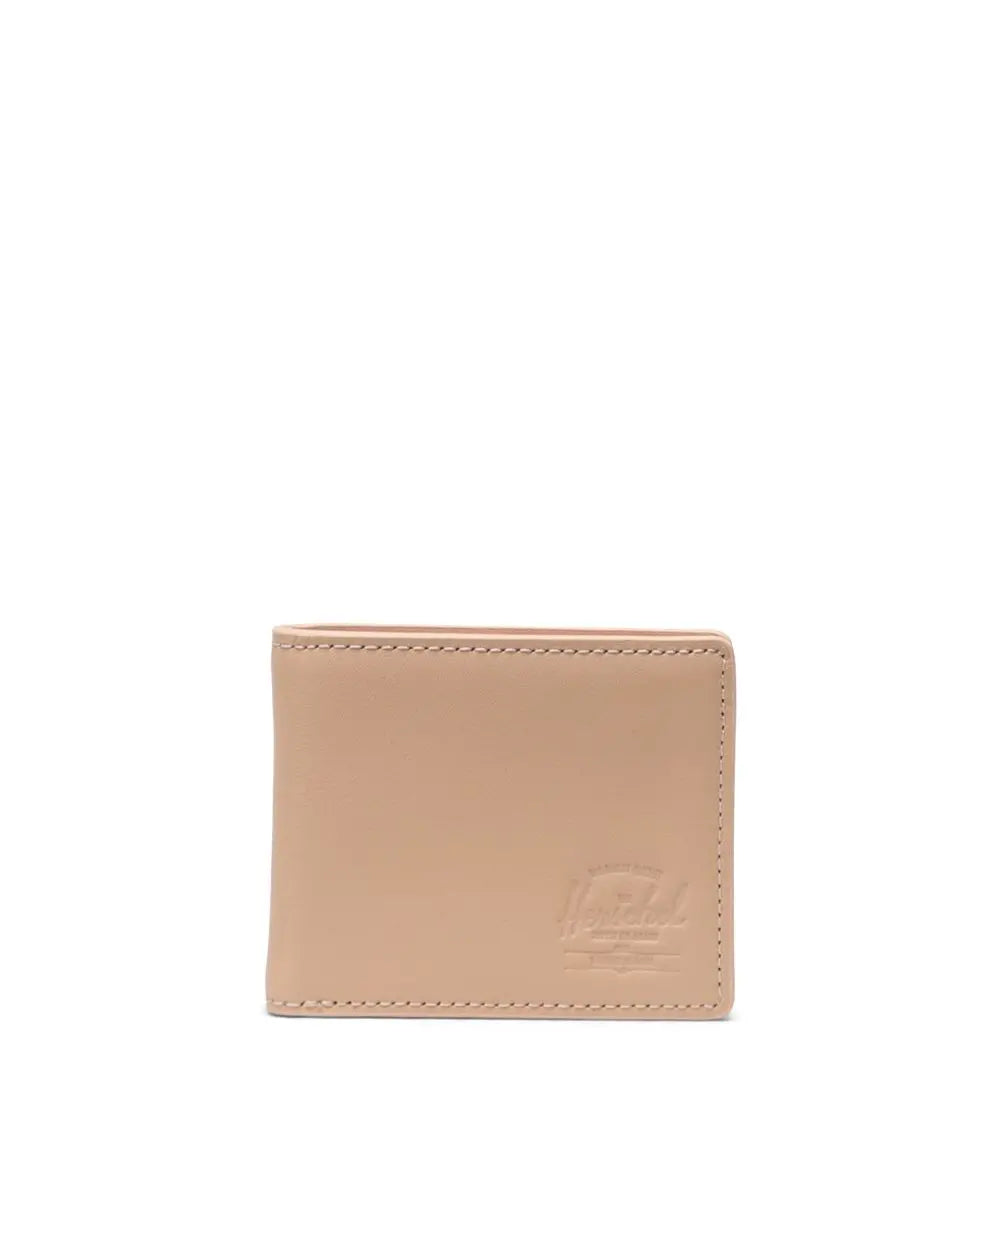 Herschel Hank Leather Wallet - Natural Leather